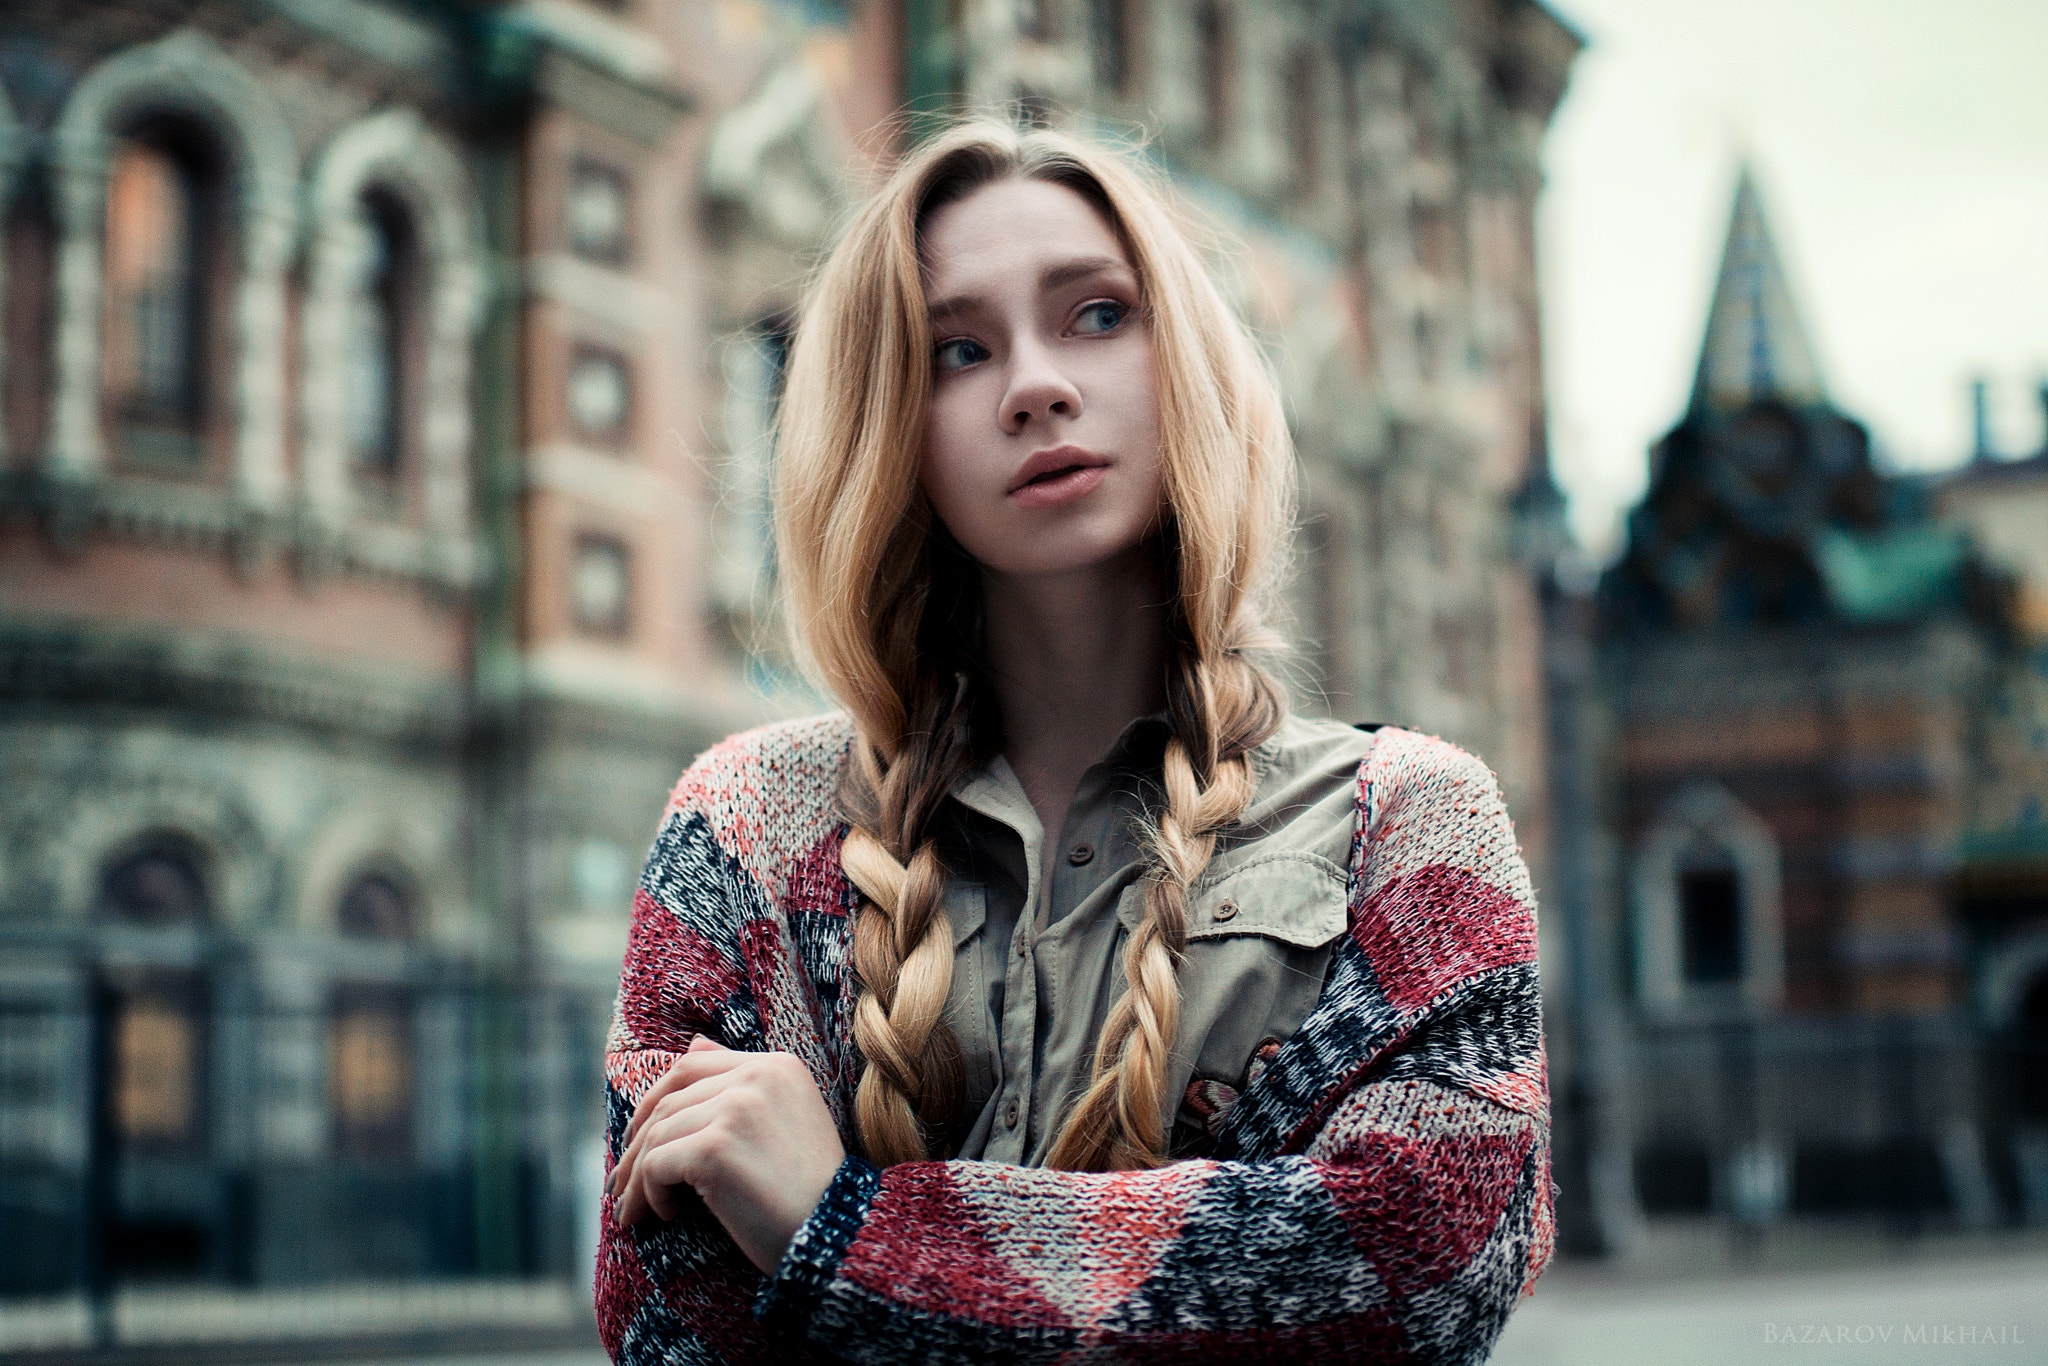 Modeling in russia. Портрет девушки. Фотопортрет. Портретная фотосессия в городе. Портрет девушки в городе.